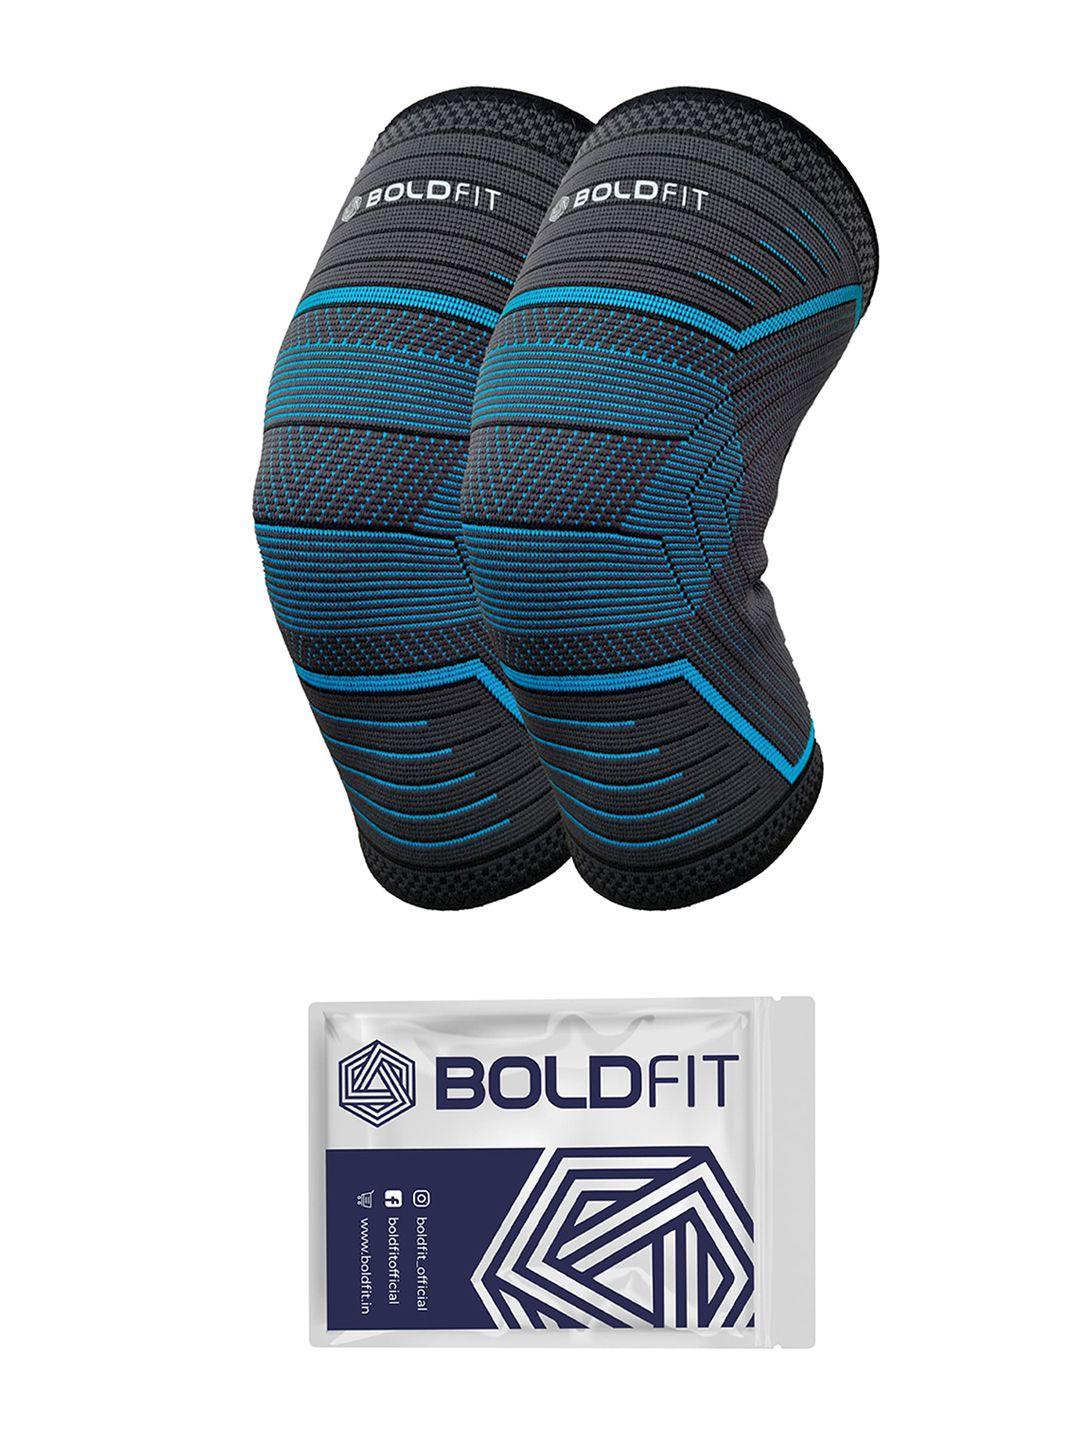 boldfit black & blue solid knee support cap